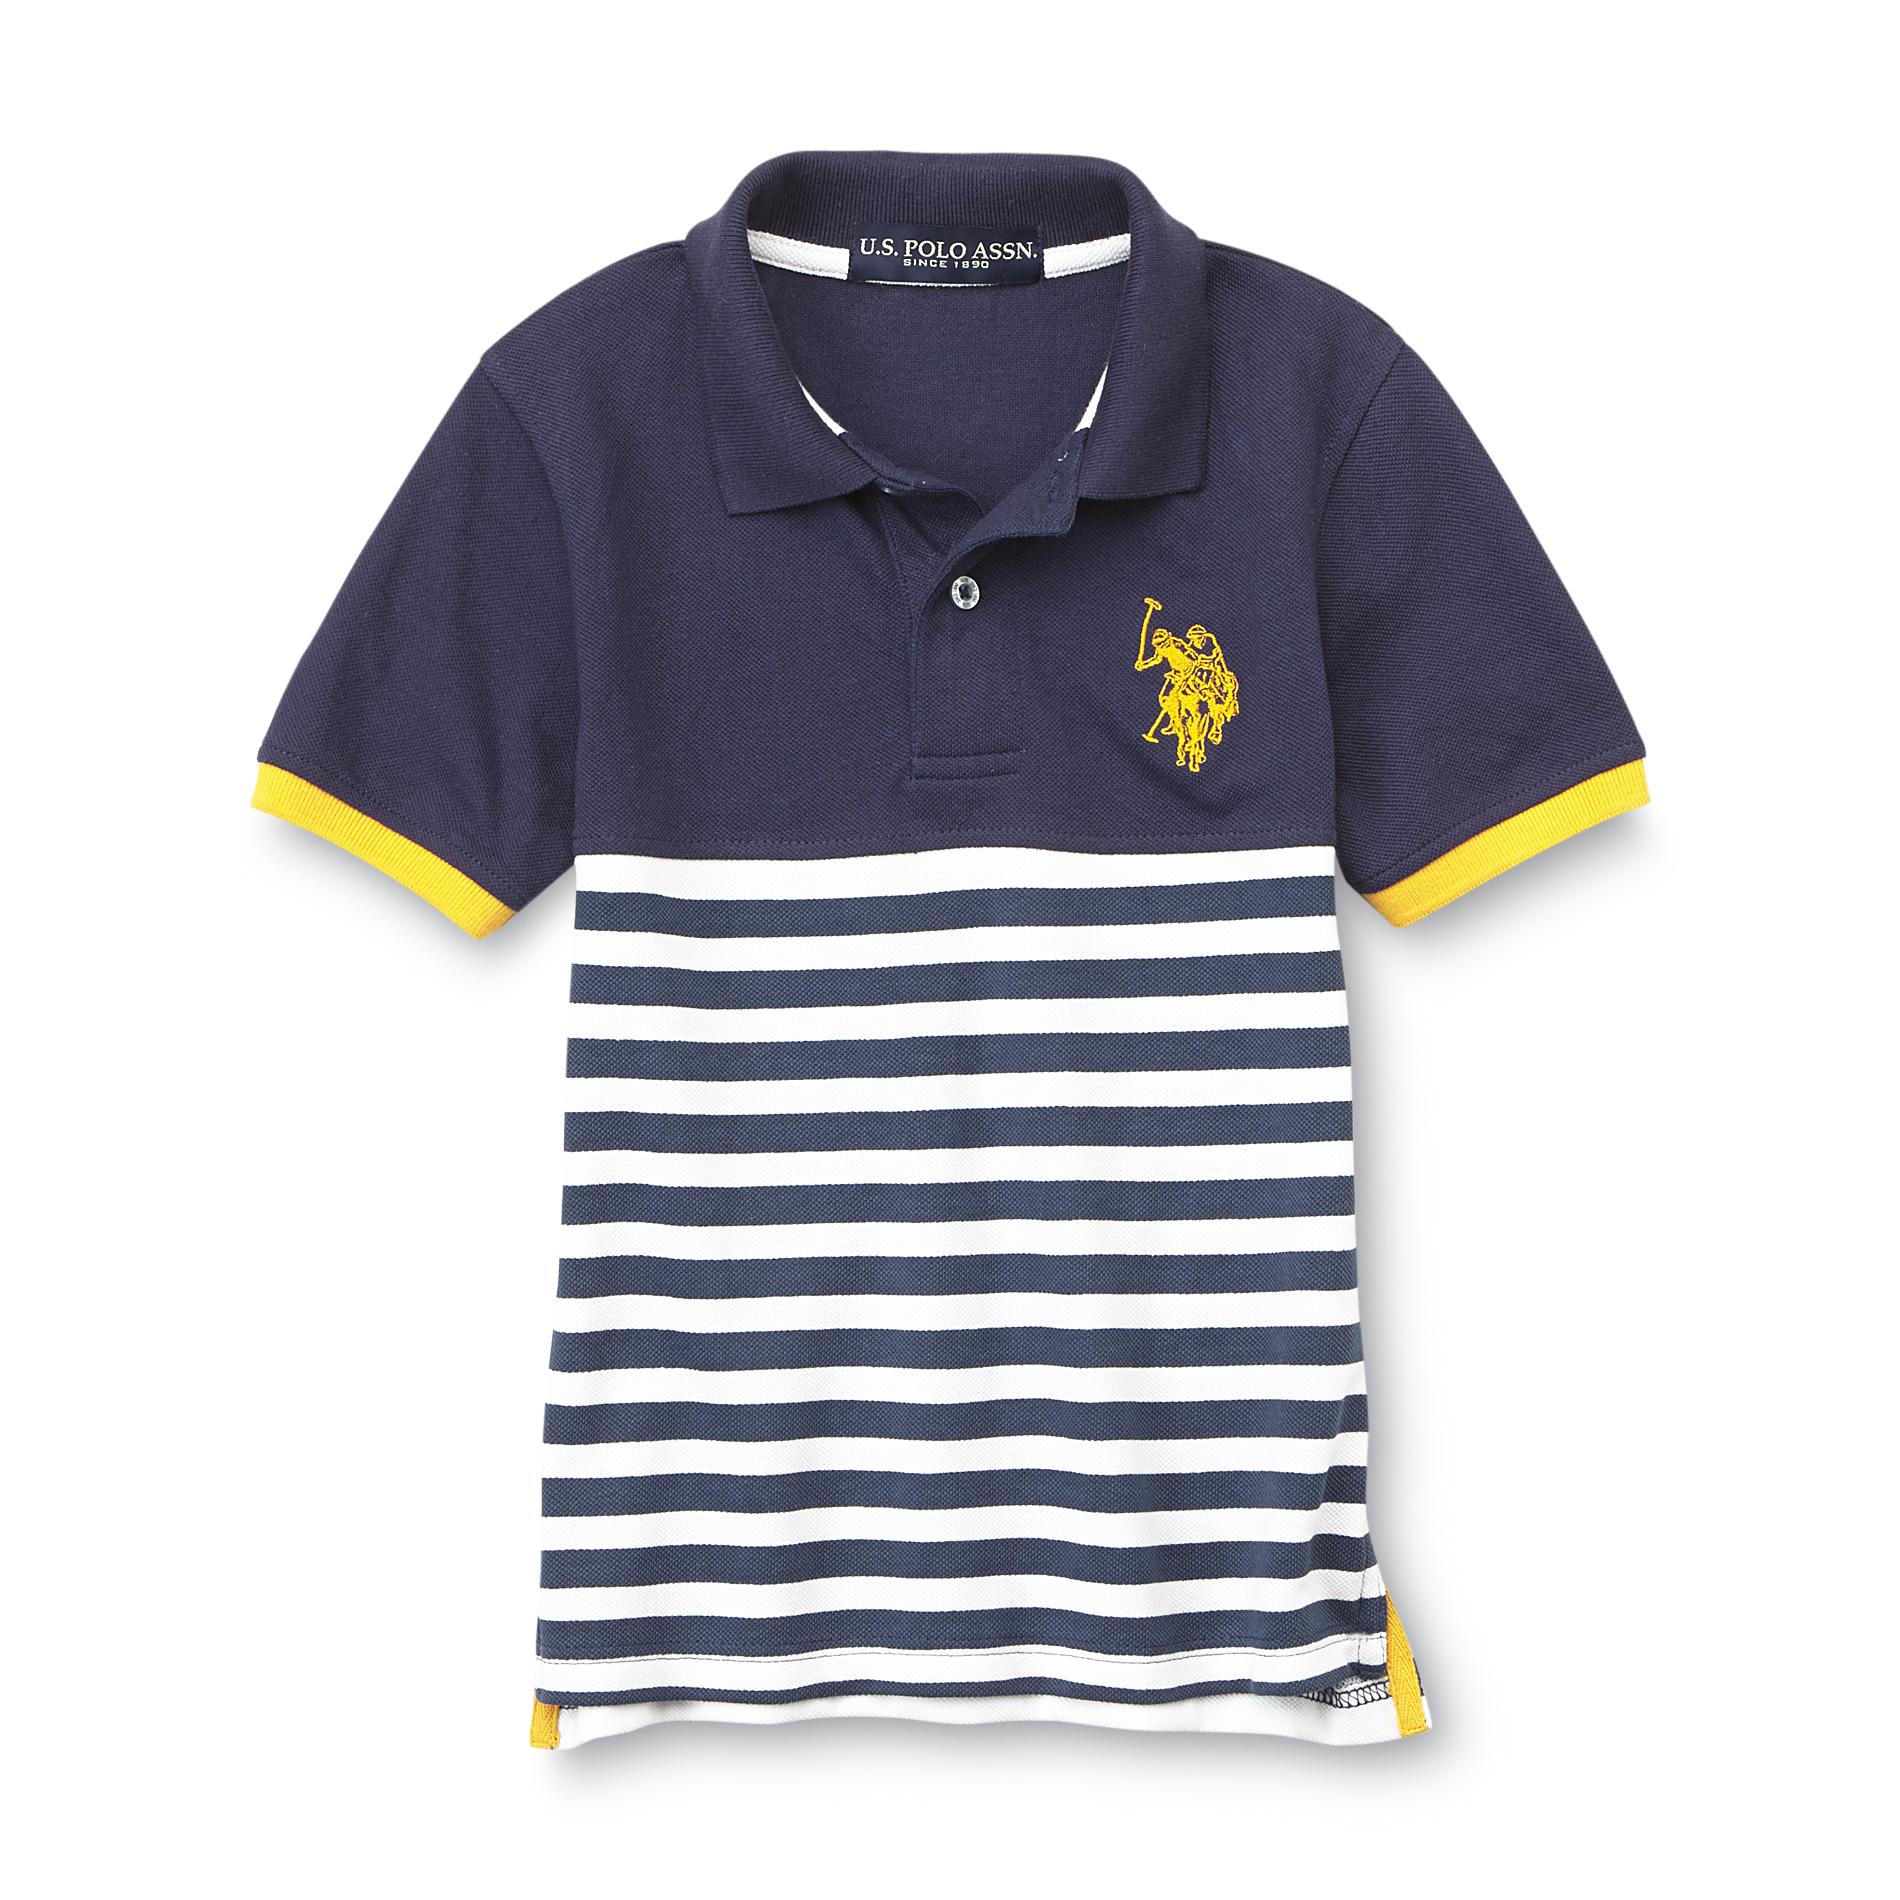 U.S. Polo Assn. Boy's Embroidered Polo Shirt - Striped